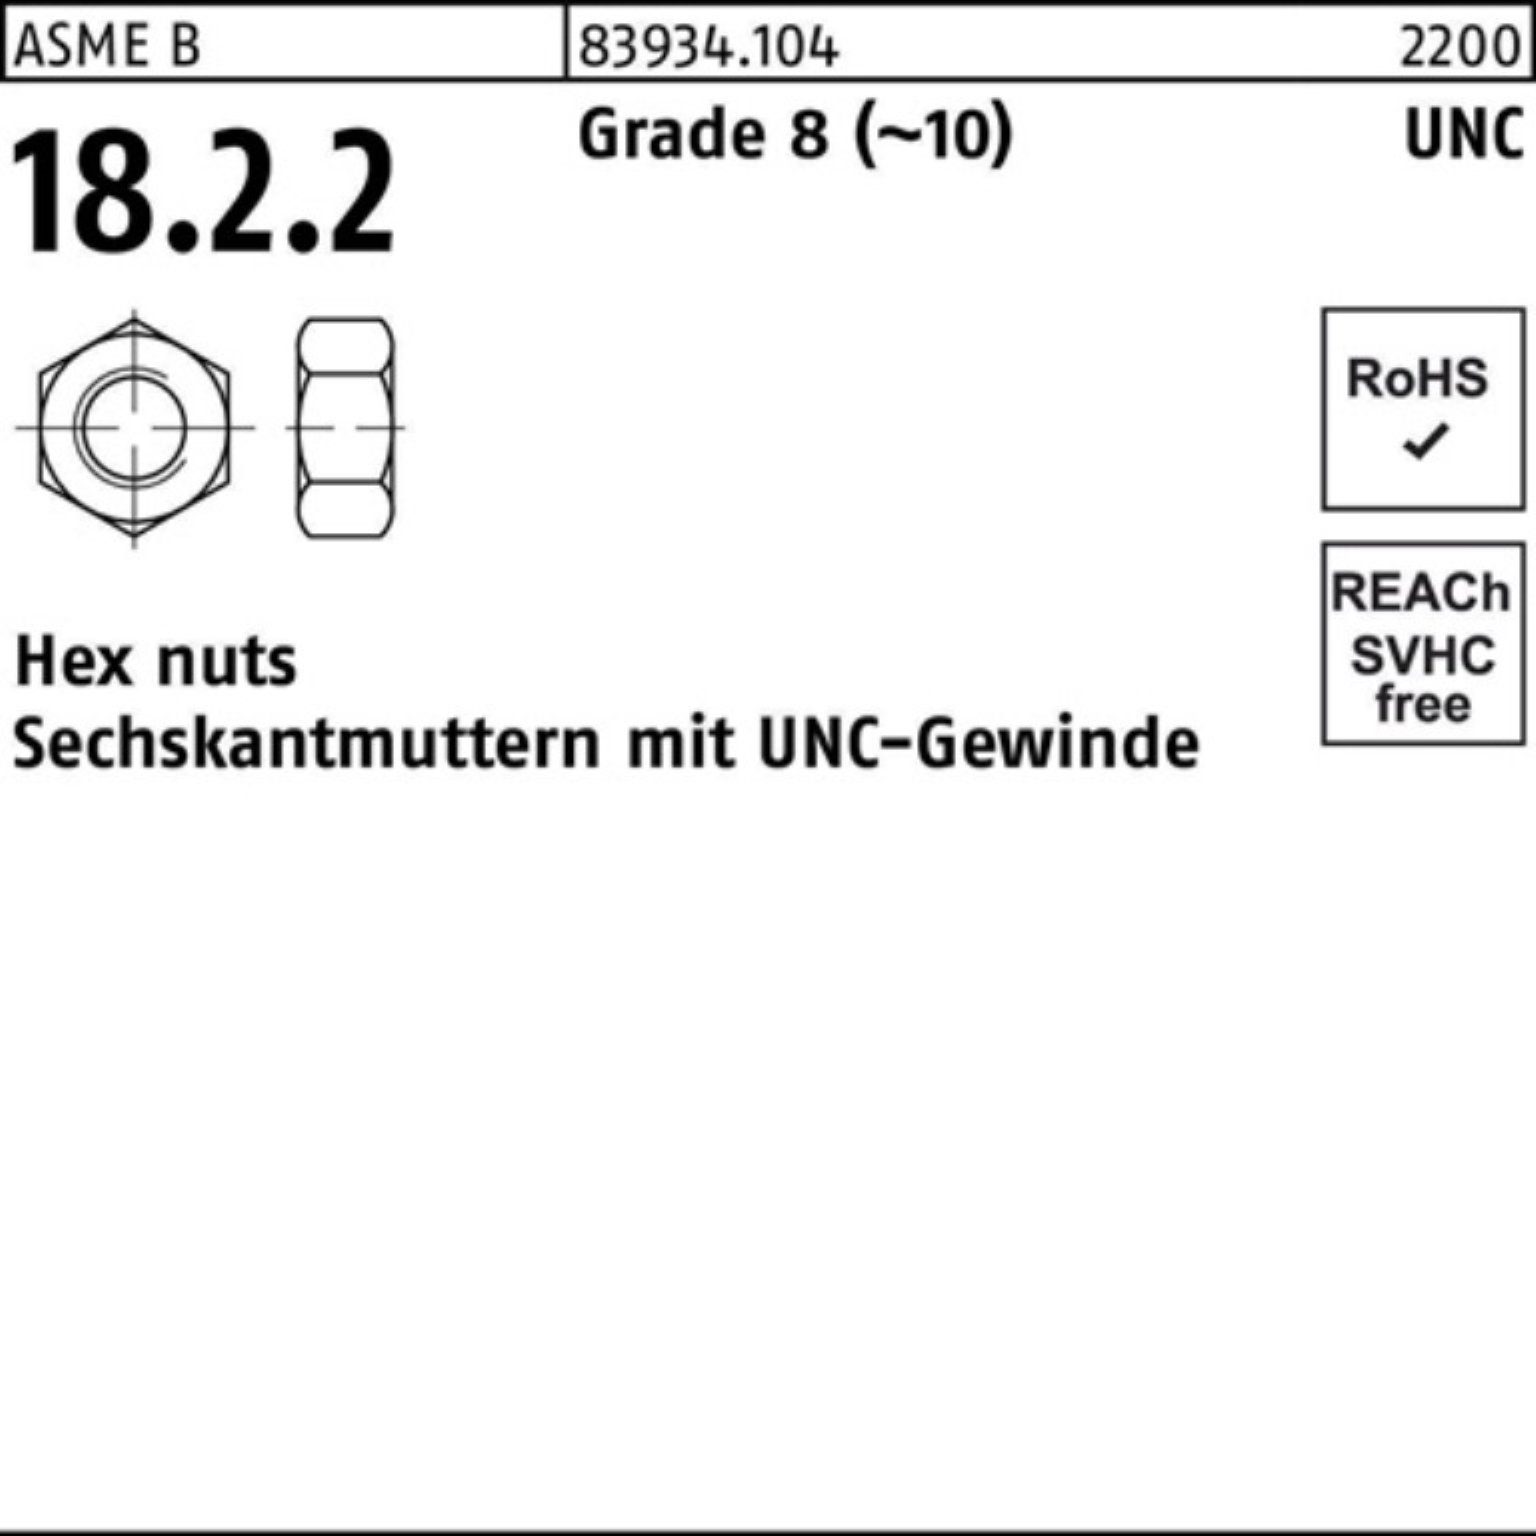 (10) Grade Reyher 9/16 Pack UNC-Gewinde 8 50 Sechskantmutter Muttern S 100er 83934 R